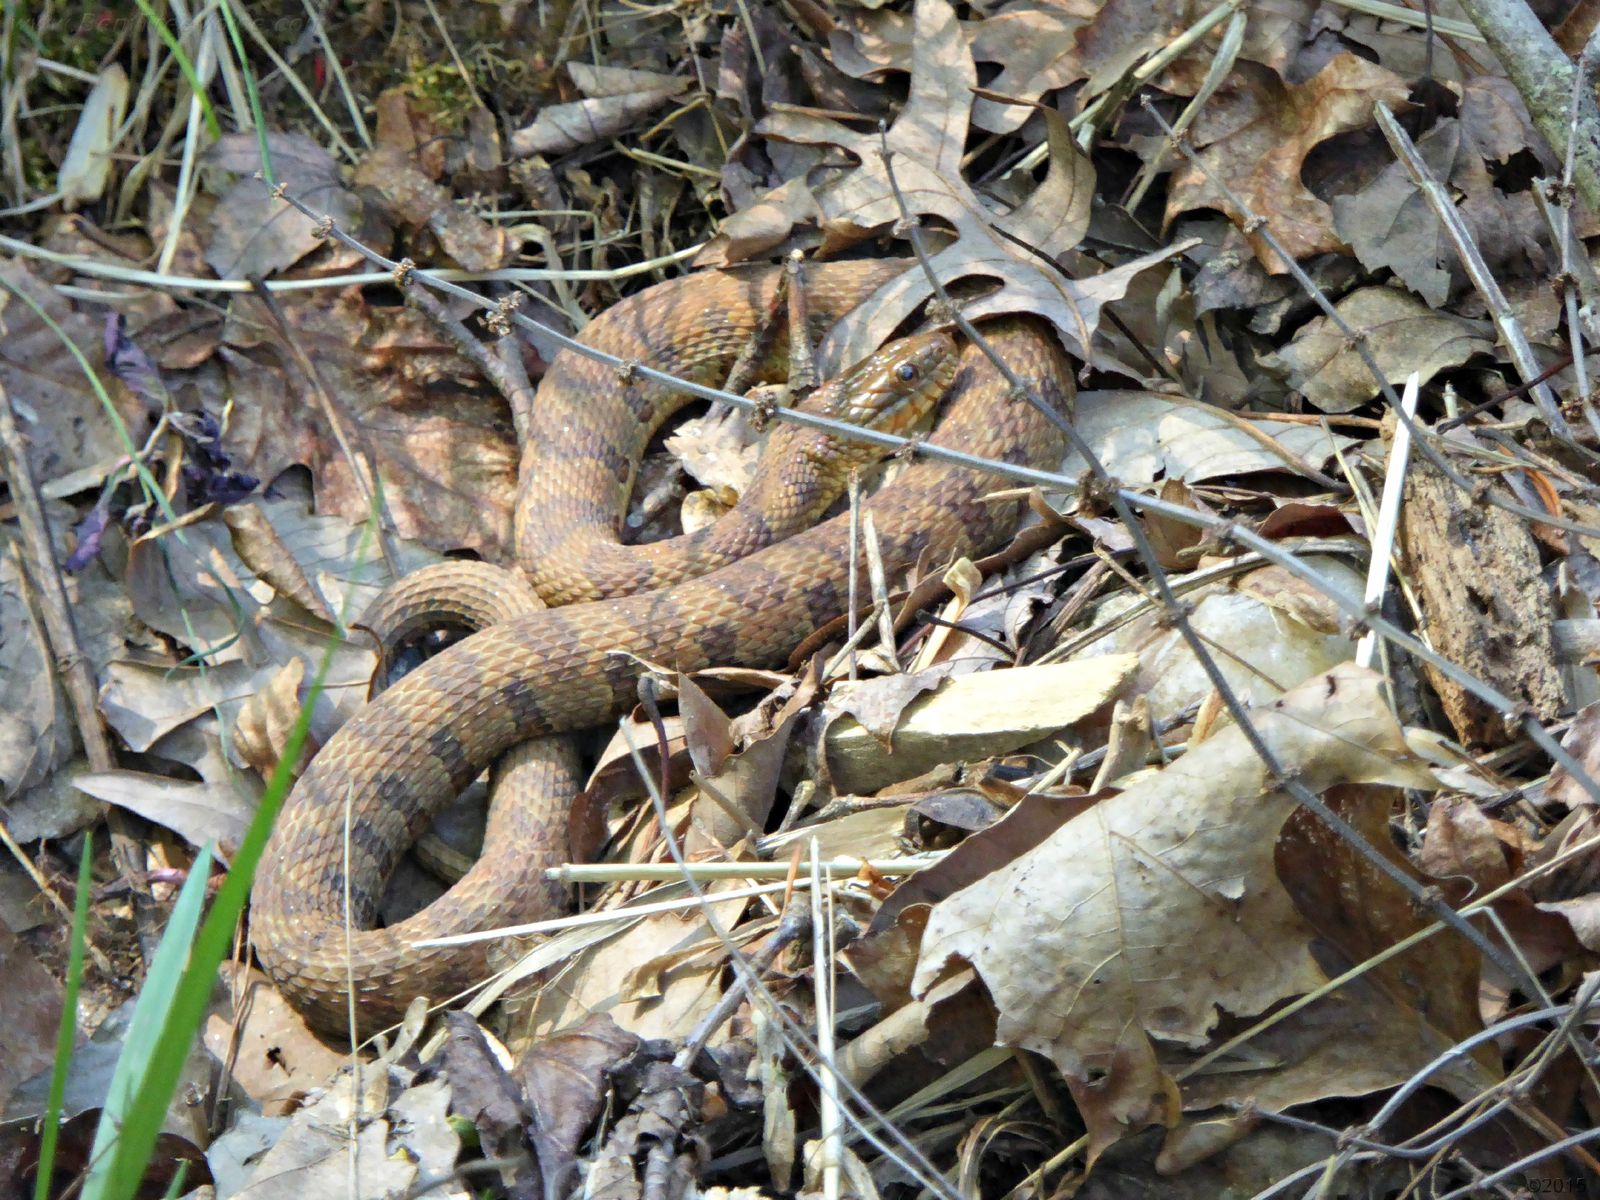 April 21, 2015 - snake in Bent Tree